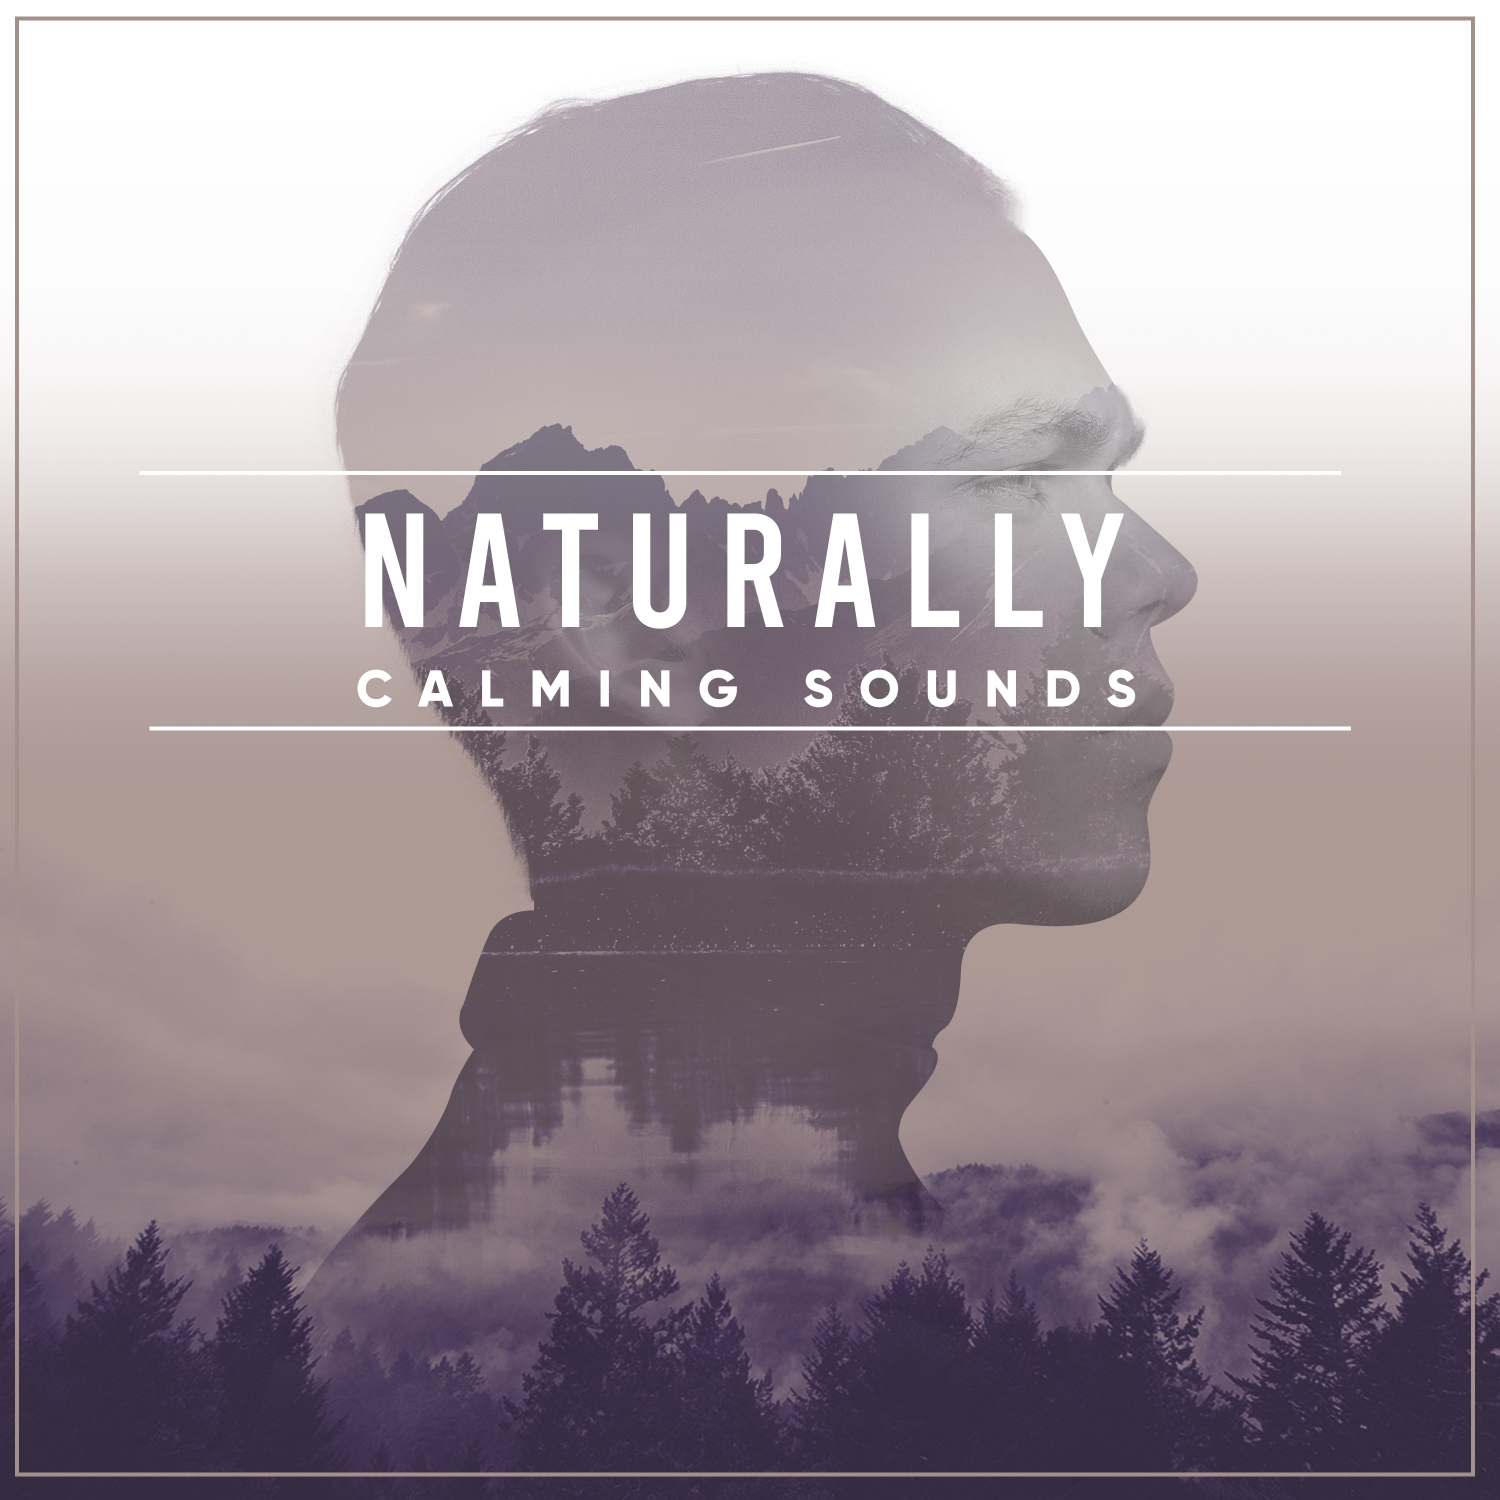 15 Naturally Calming Sounds to Calm your Brain